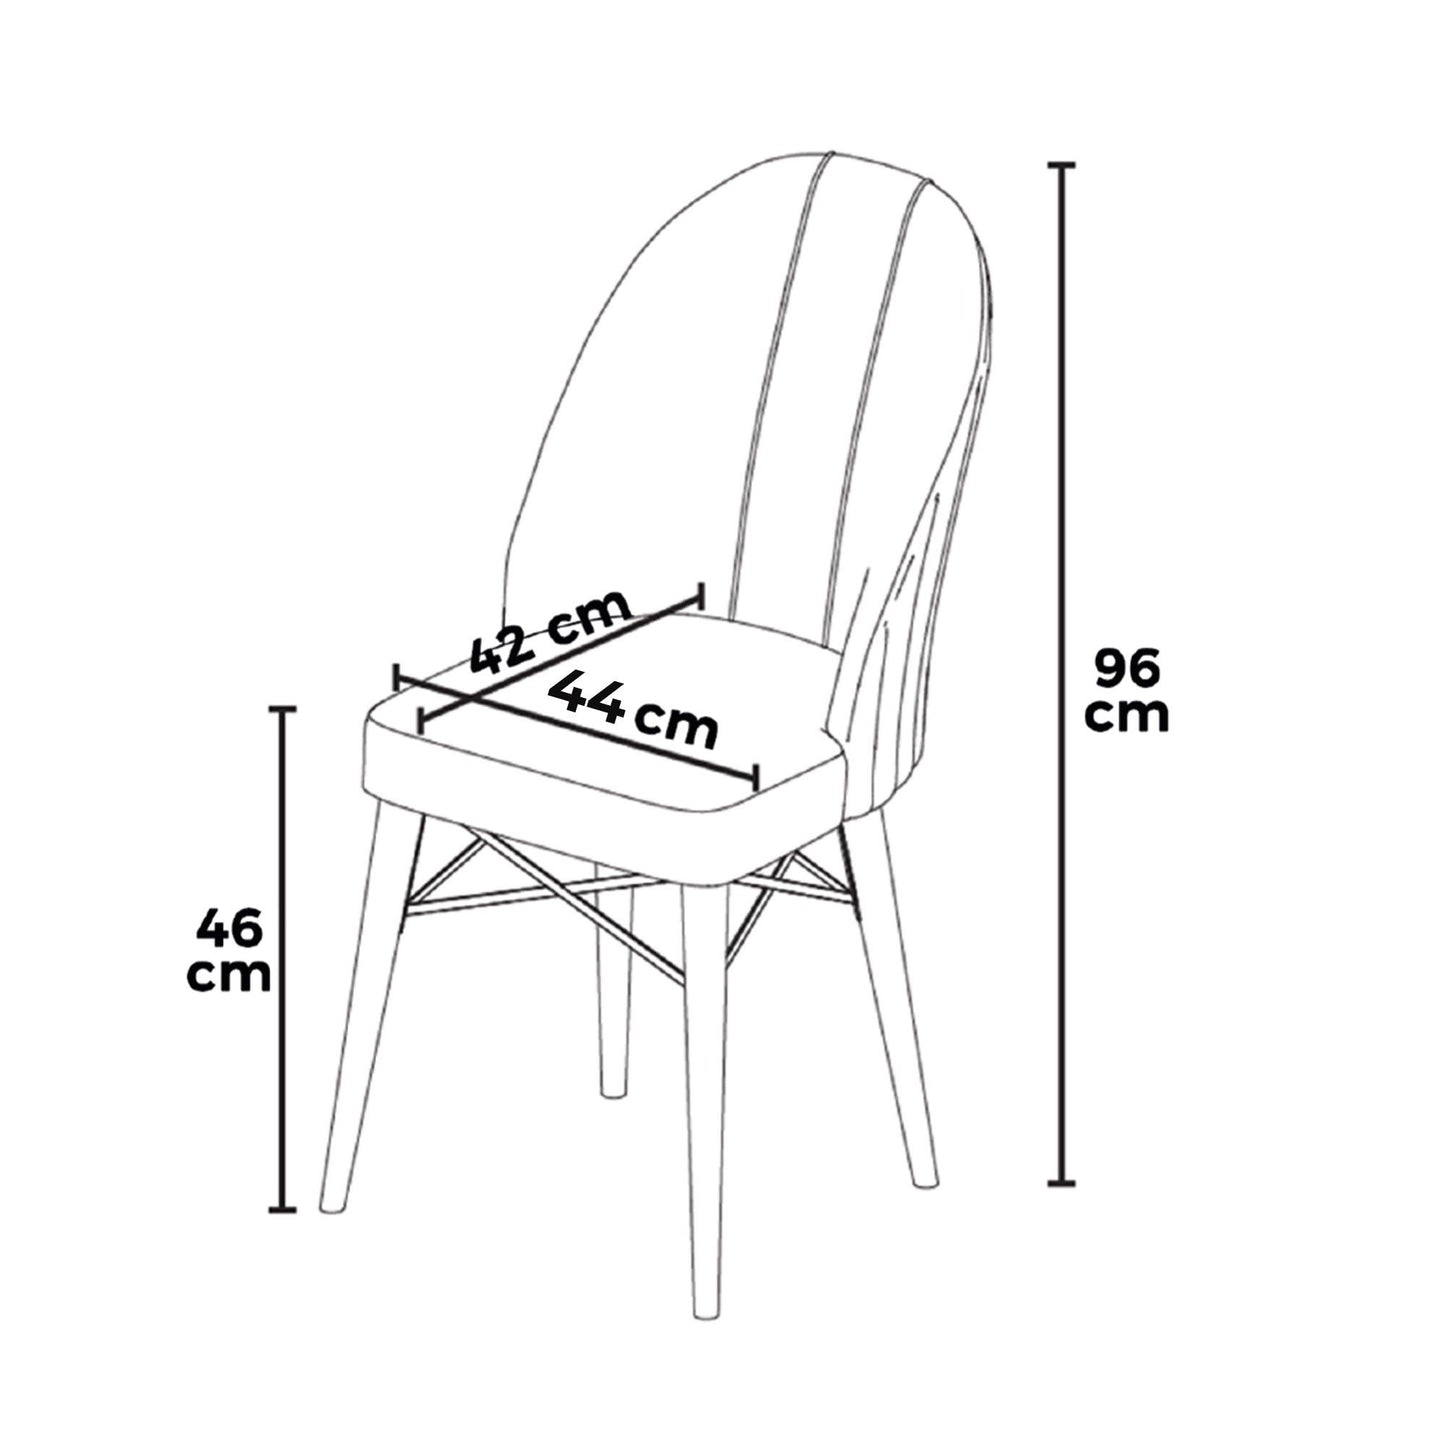 Ritim - Cappuccino, Brown - Chair Set (4 Pieces)